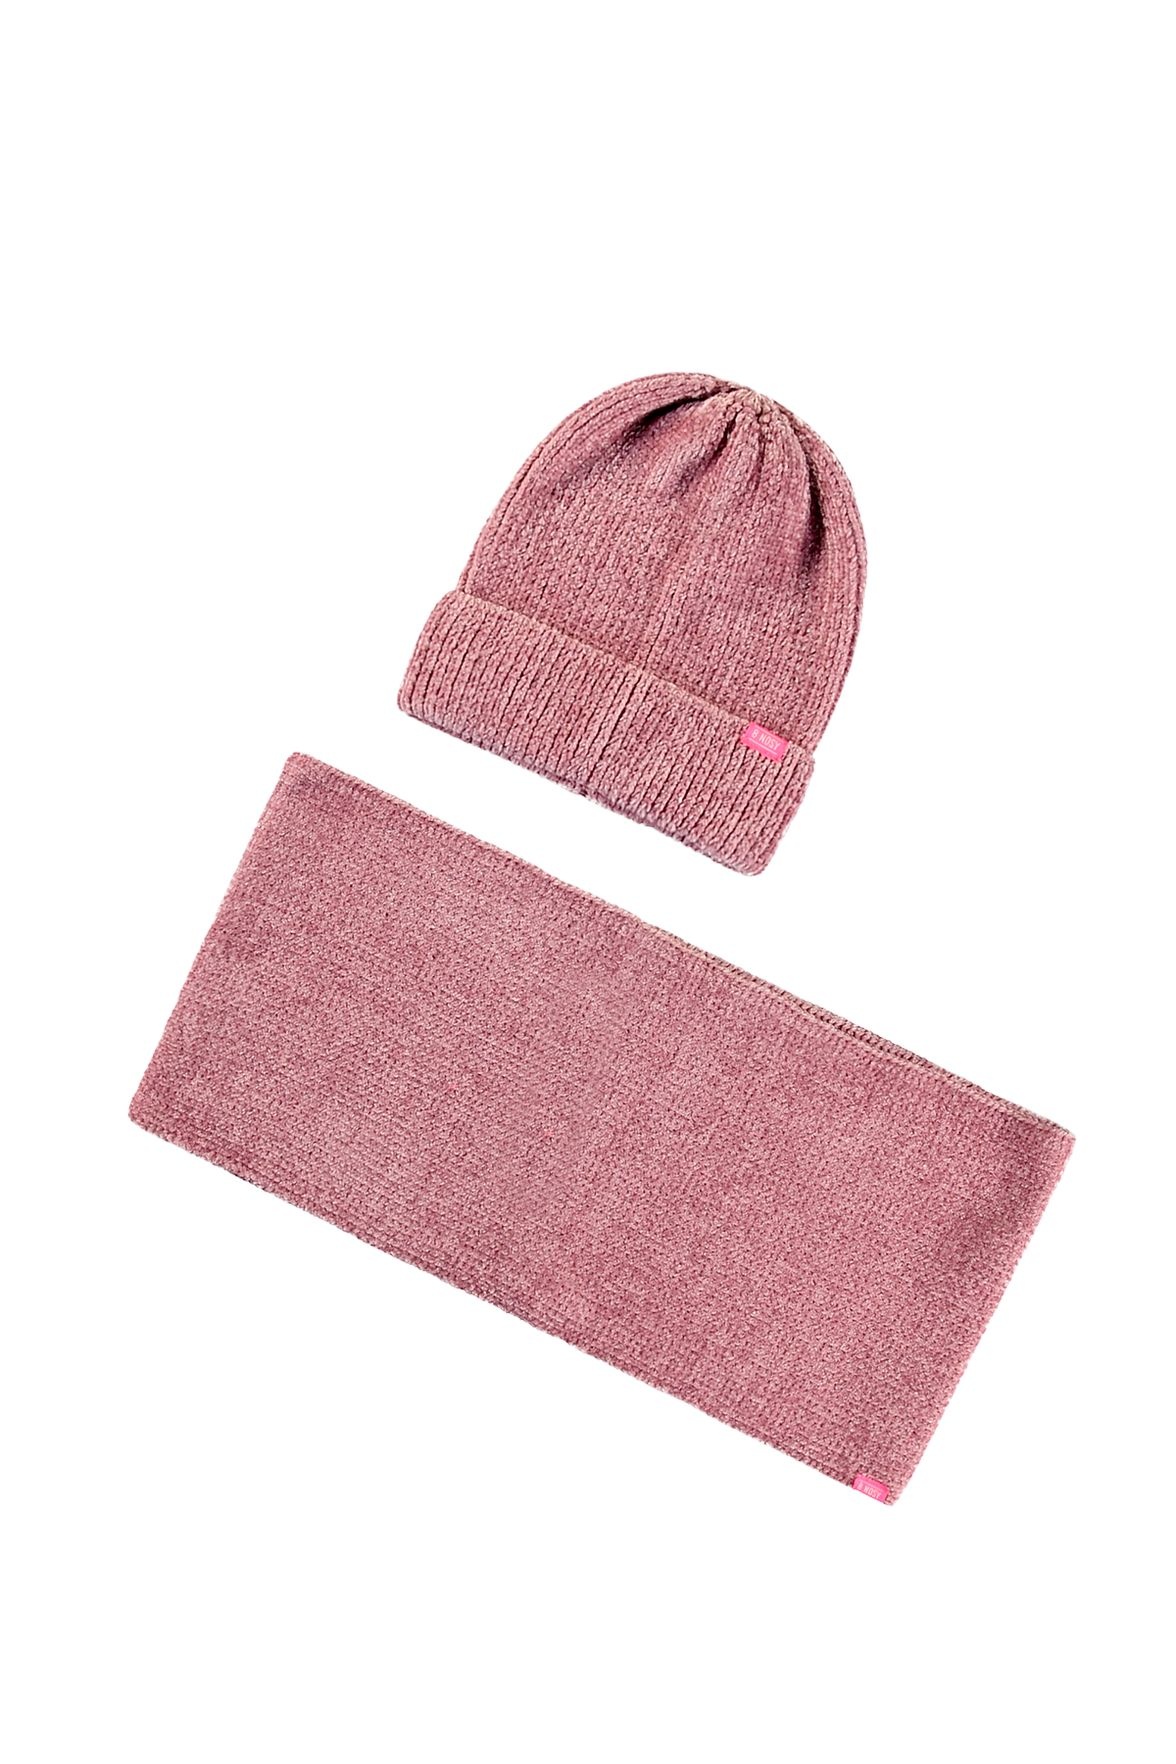 B.Nosy Boys Kids Accessories hats/scarfs/gloves Y307-6910 maat 1